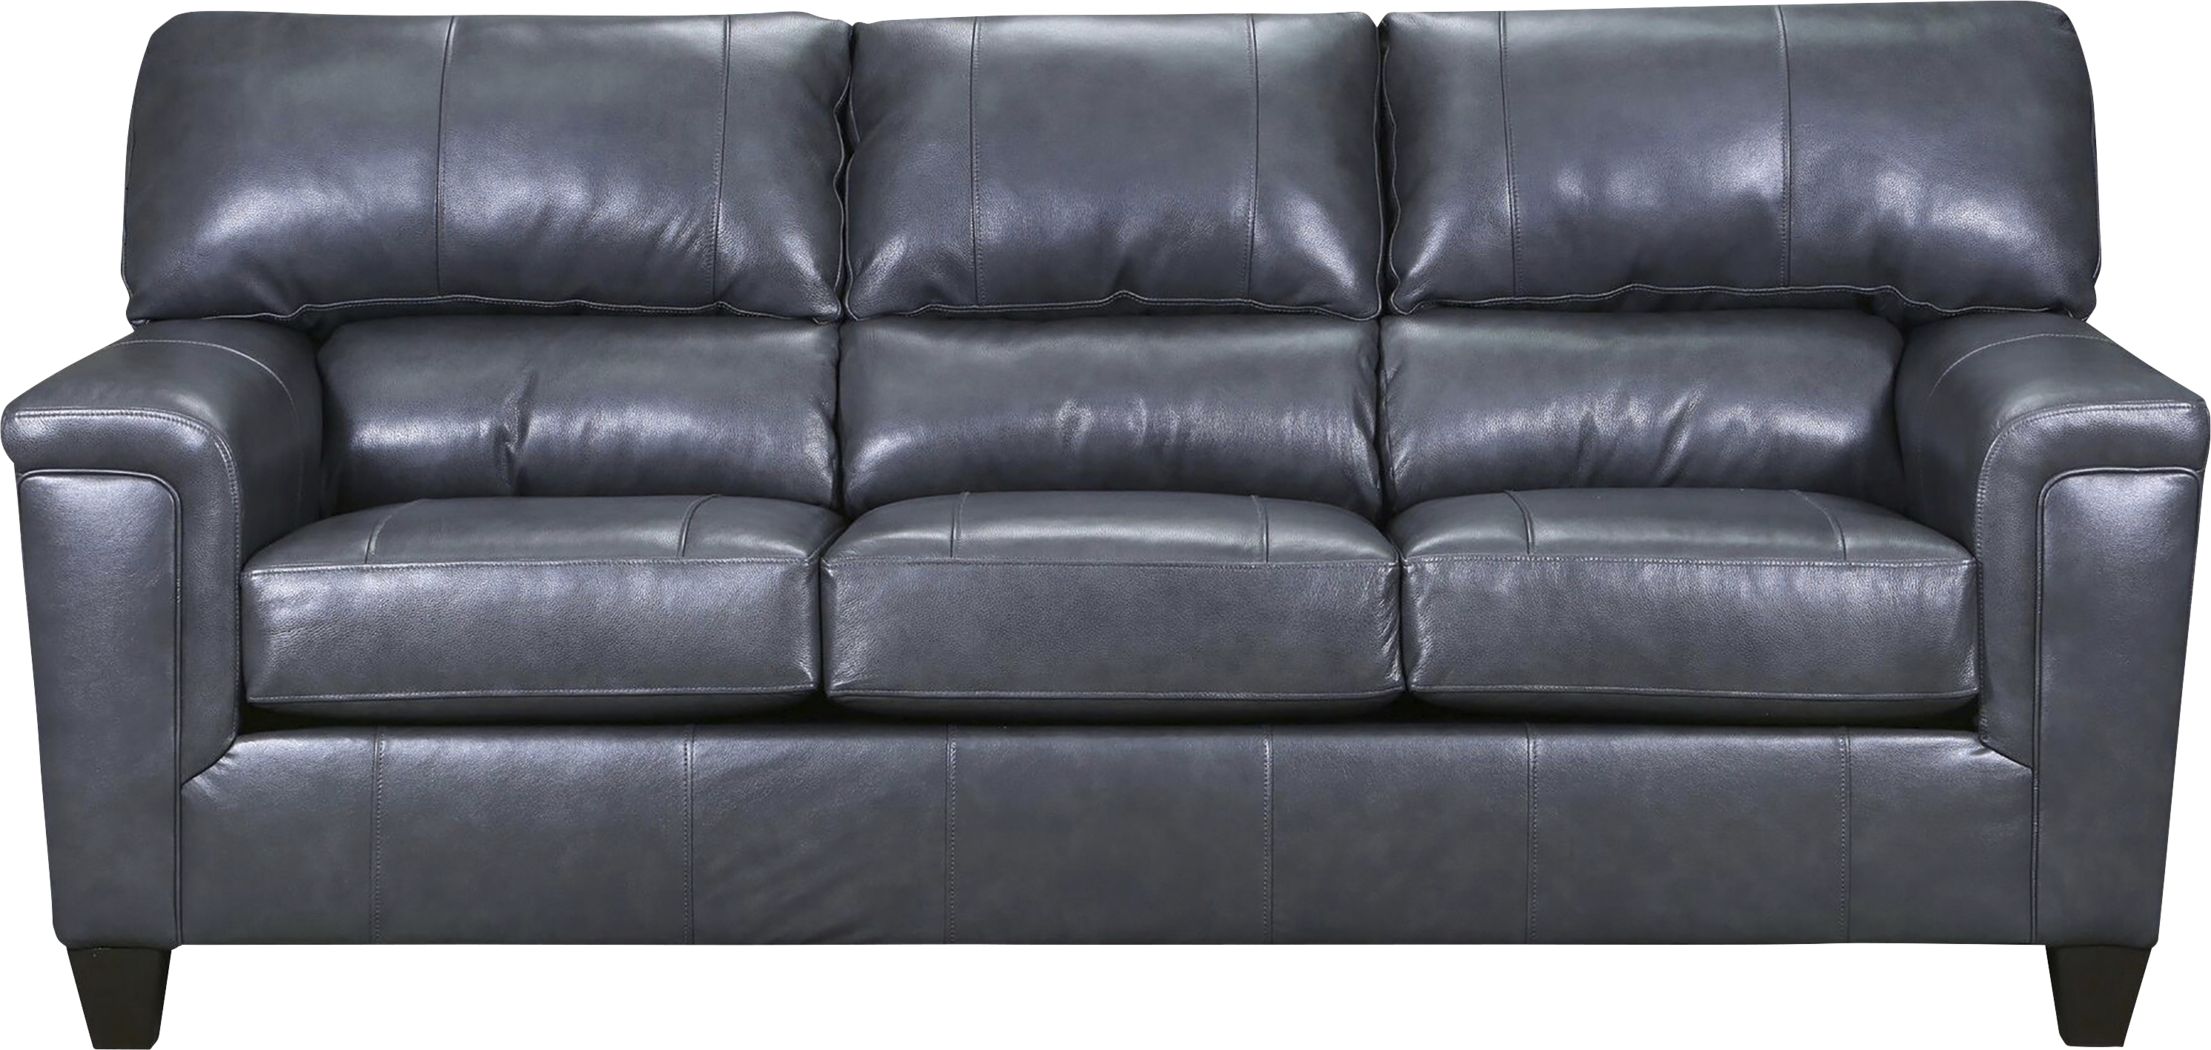 Leather Living Room Furniture, Leather Livingroom Furniture